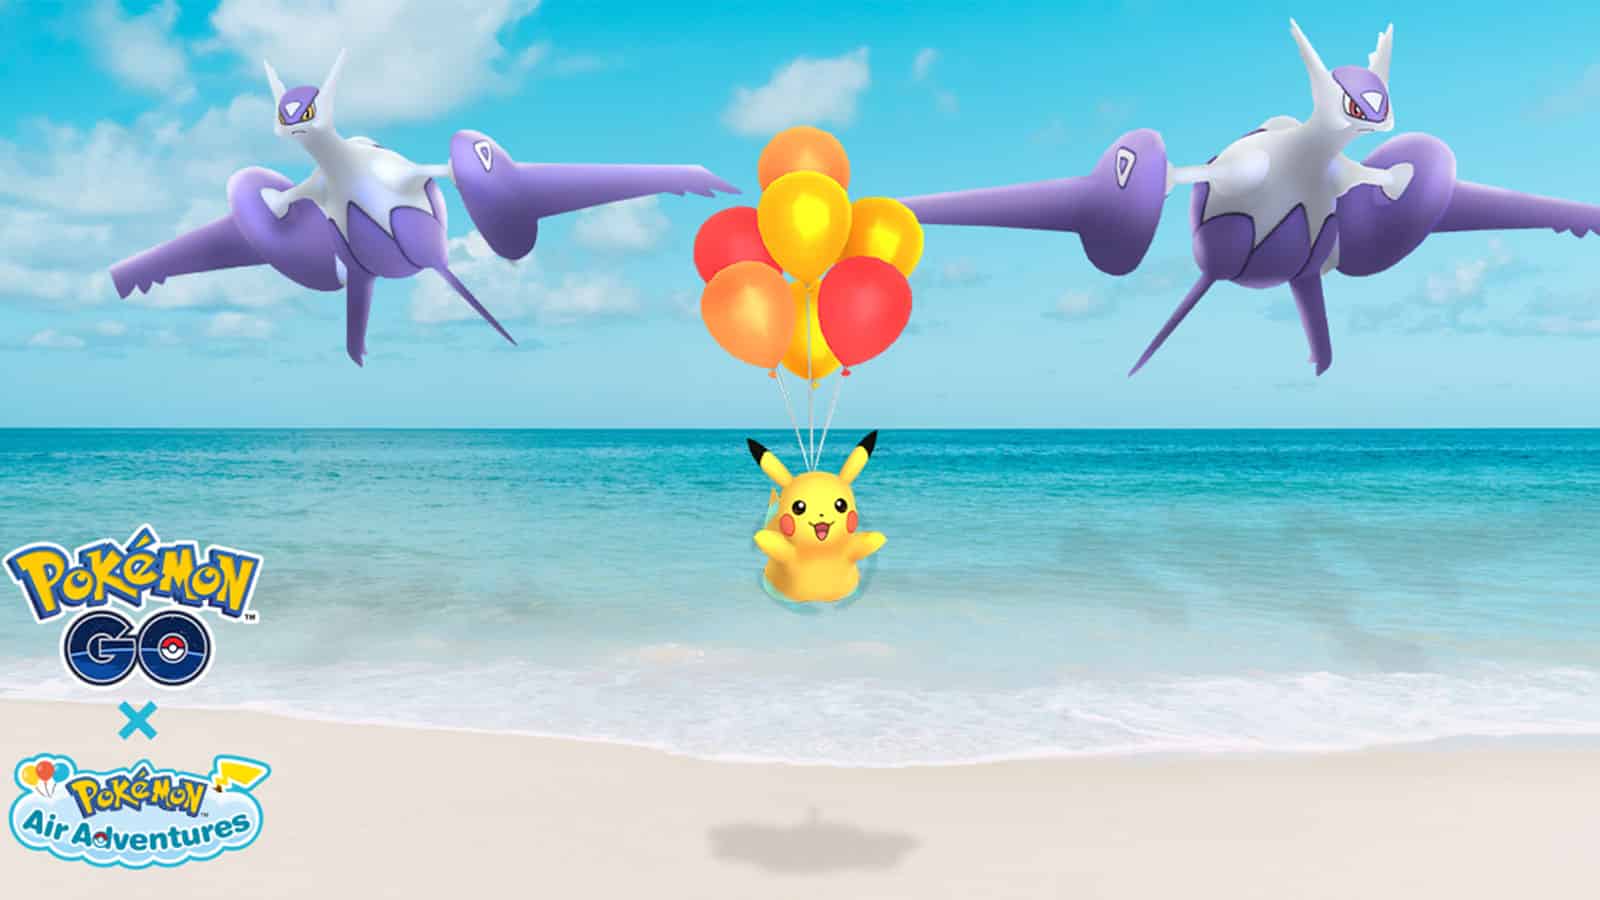 Pokémon Go Air Adventures event